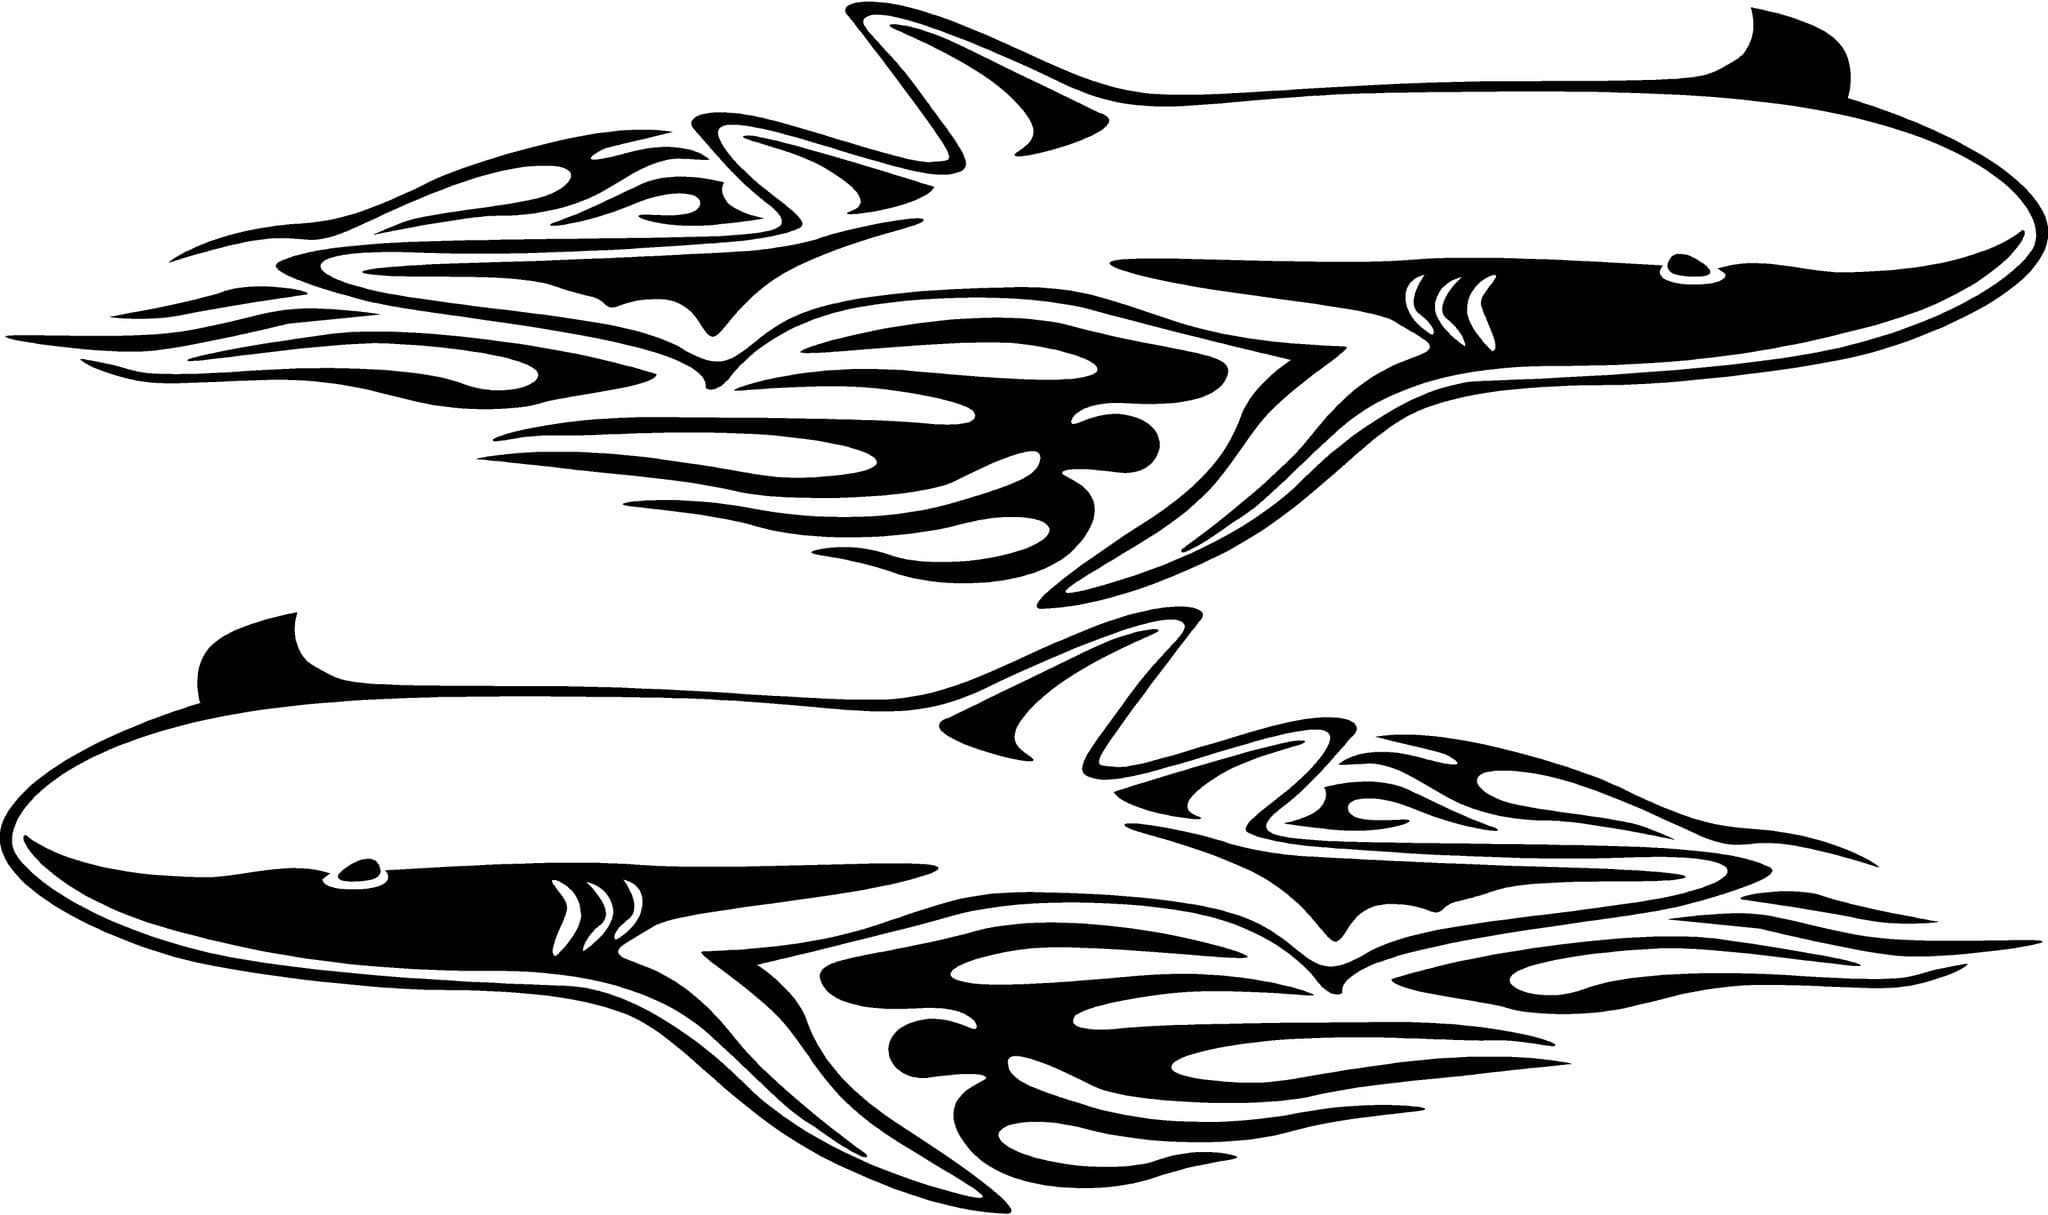 shark boat decals